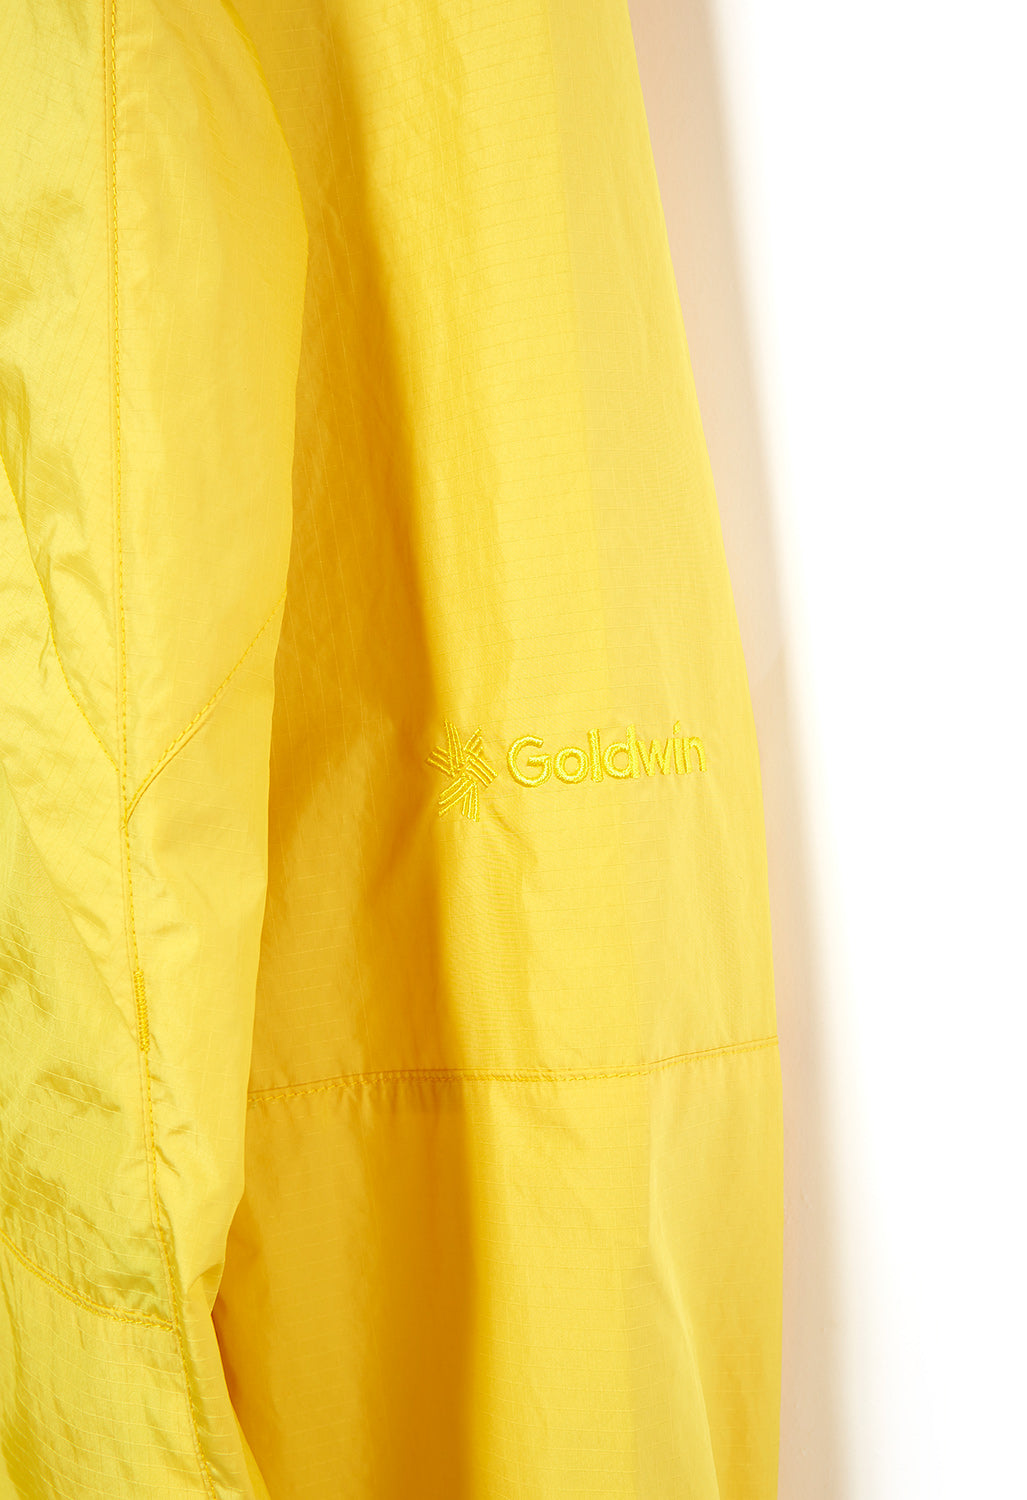 Goldwin Men's Rip-Stop Light Jacket - Bright Yellow